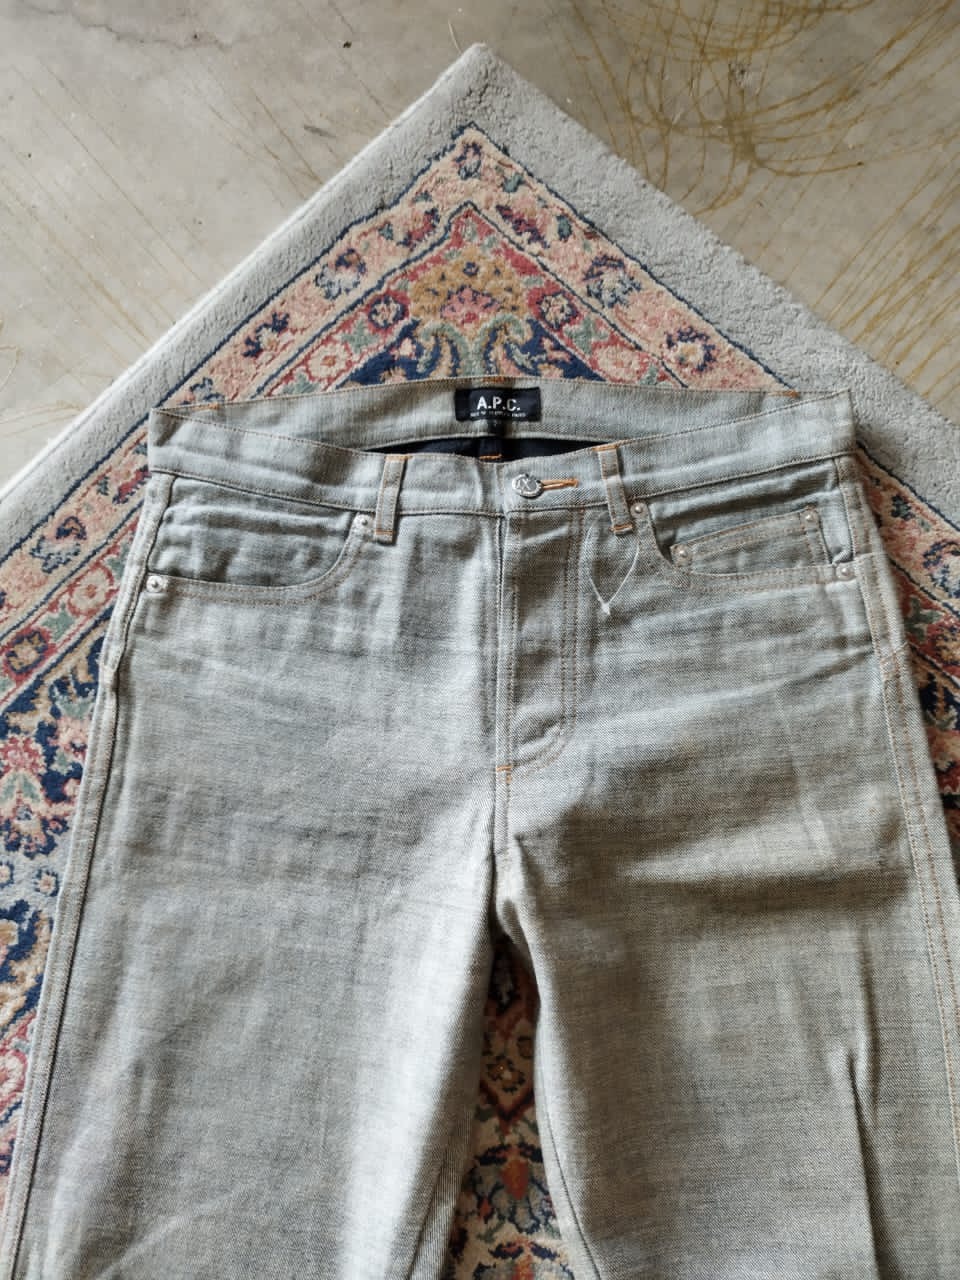 A.P.C grey jeans - 4